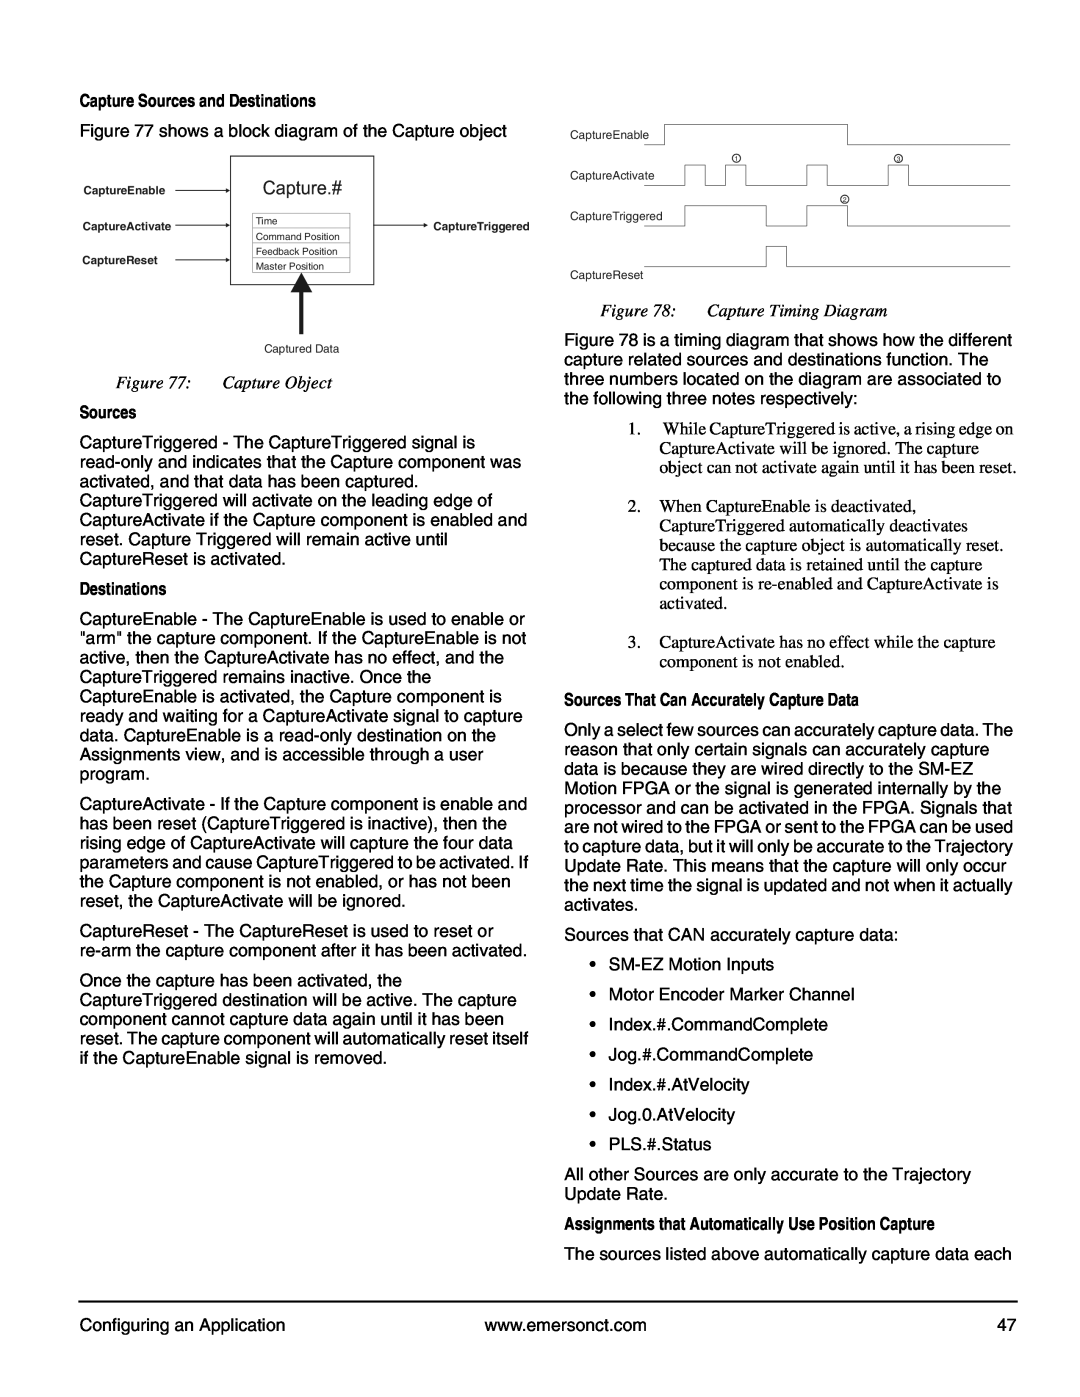 Emerson P/N 400361-00 manual Capture Timing Diagram, Capture Object, Capture Sources and Destinations 